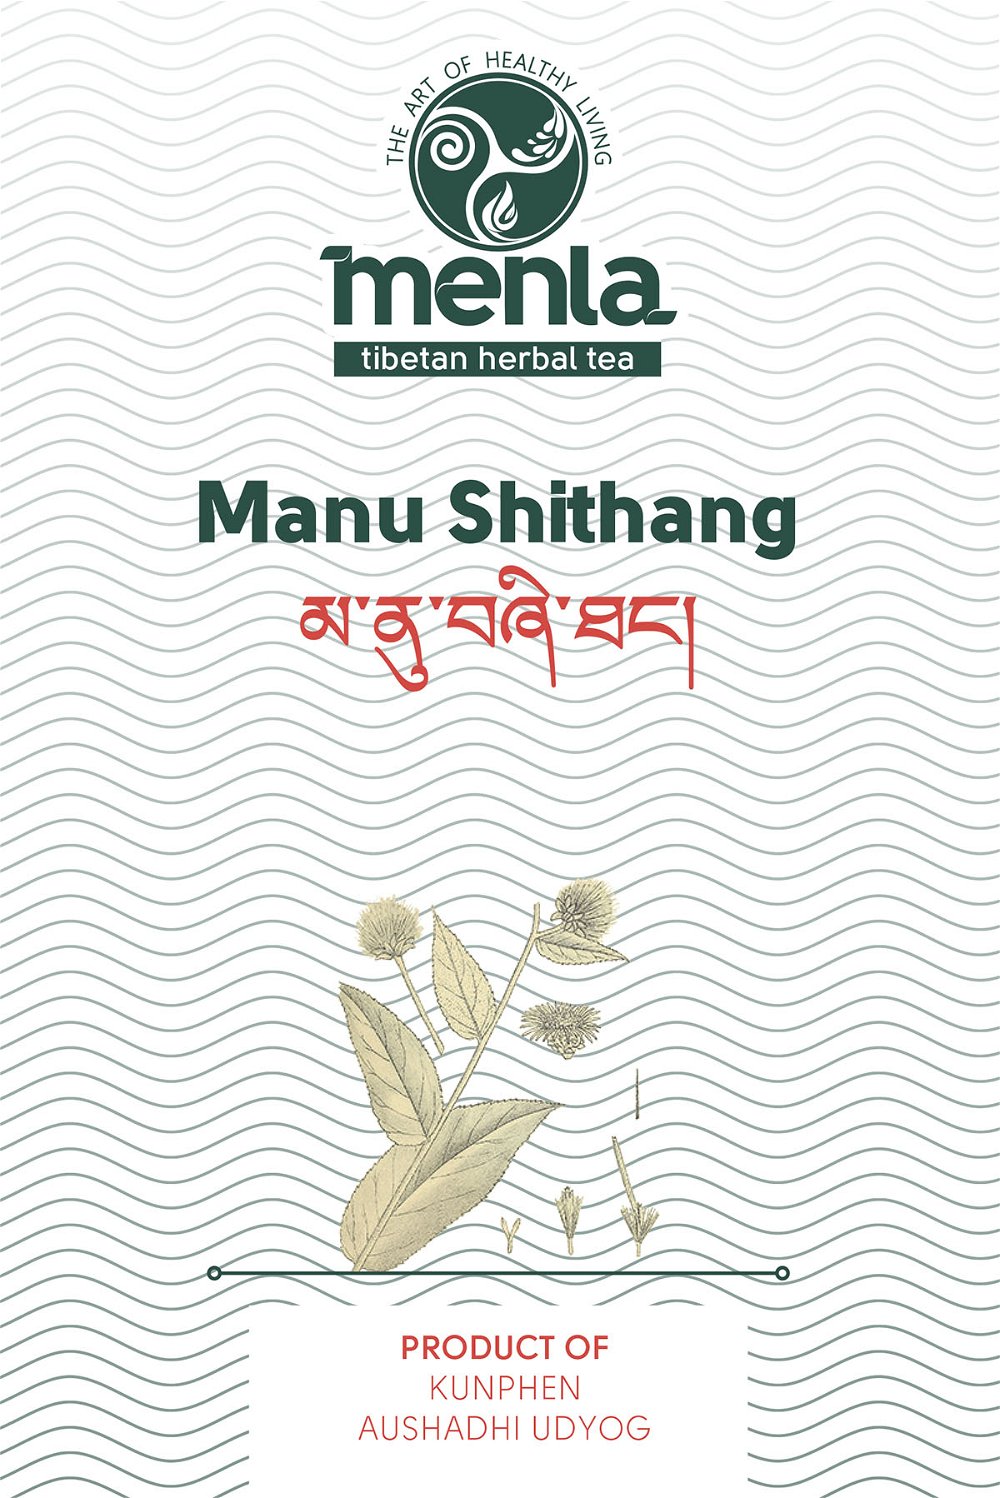 Тибетский фитосбор Ману Шитанг (Ману 4-тханг, Манушитан) / Manu Shithang (Manu 4-thang) — в порошке, 100 гр на месяц